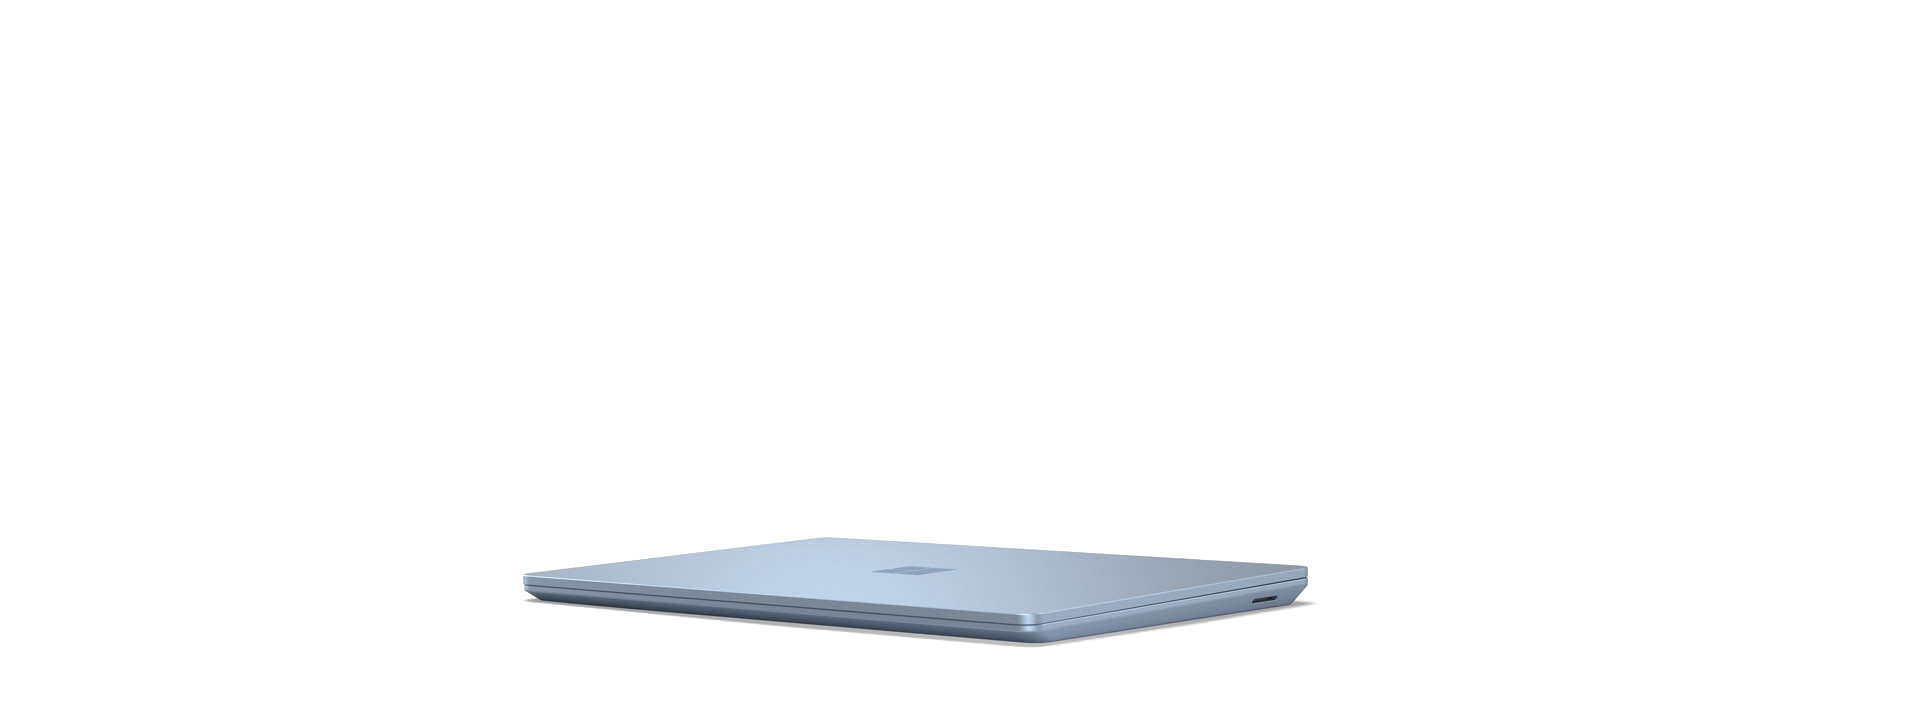 Gedraaide weergave van Surface Laptop Go.